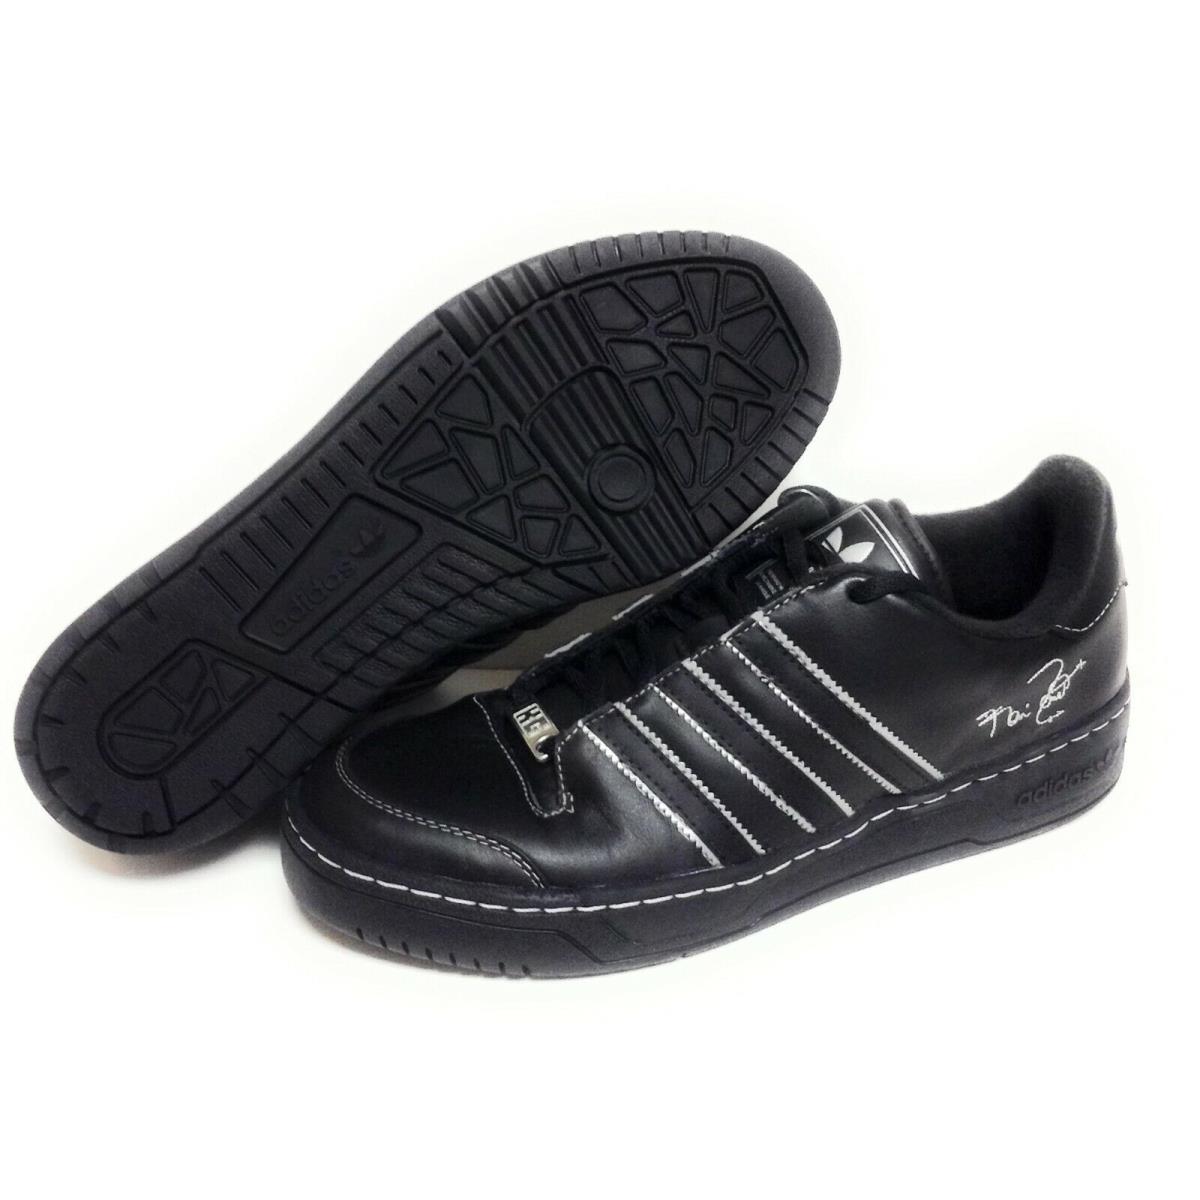 Mens Adidas KG Attitude Double Lo 551362 2004 Deadstock Black Sneakers Shoes